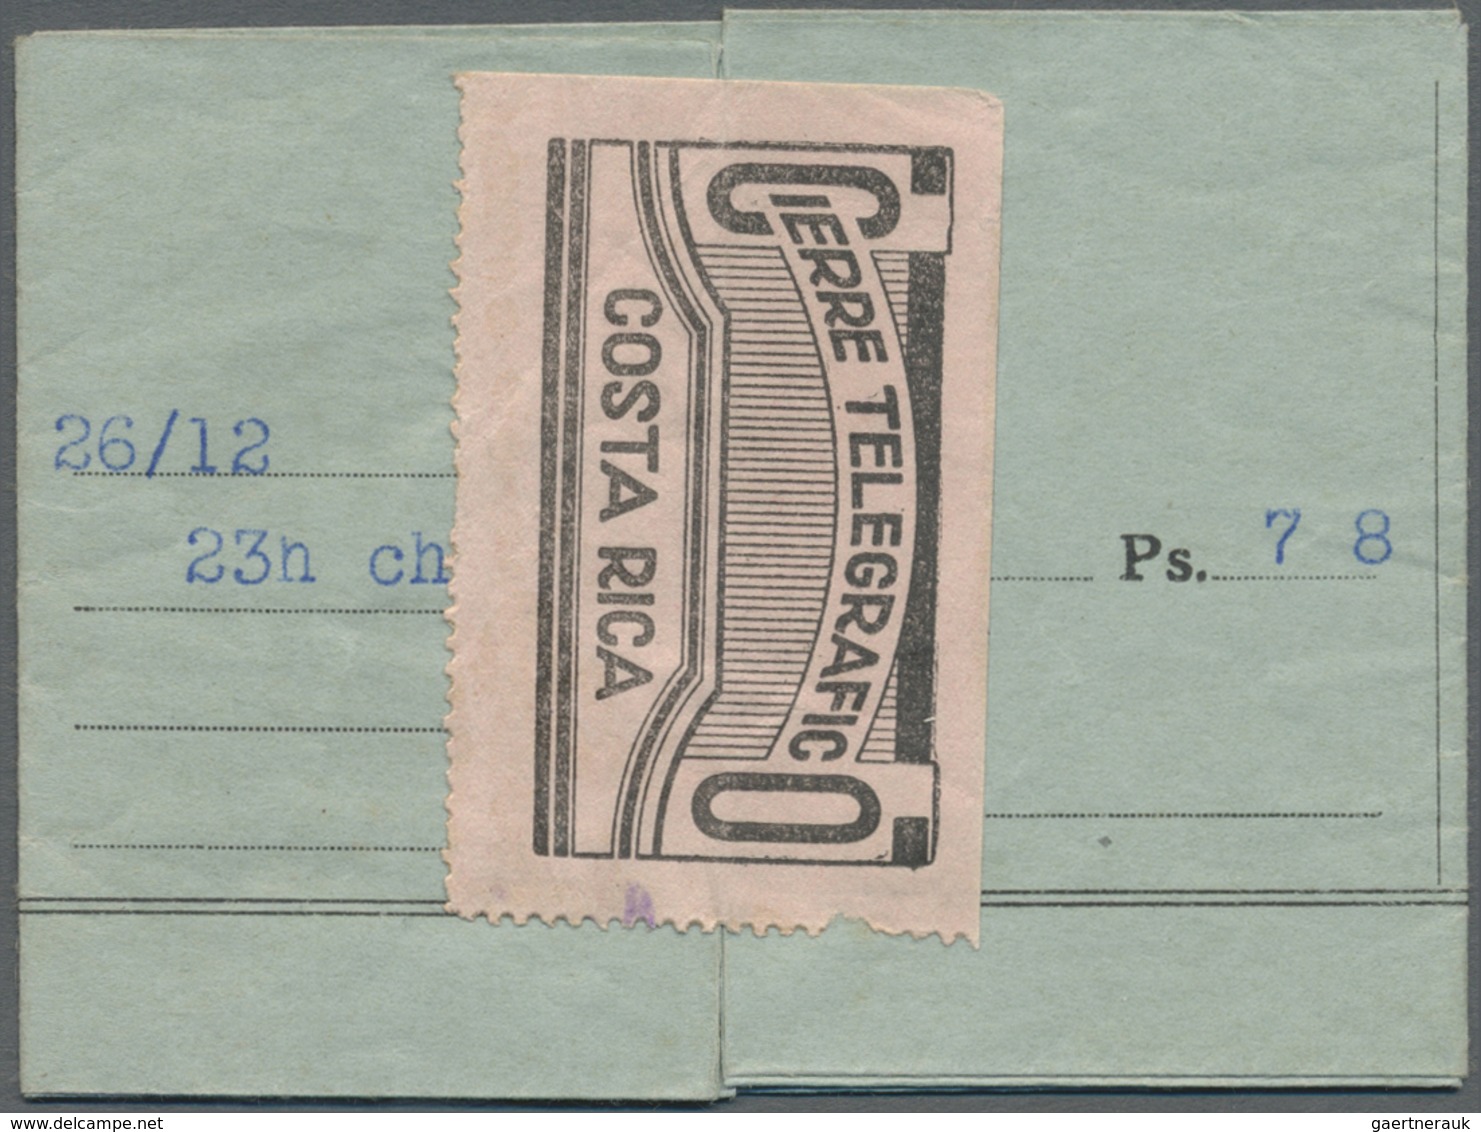 Br Costa Rica: 1936 (25.12.), Telegram Form 'TELEGRAFOS NACIONALES TELEGRAMA COSTA RICA' Used For Incom - Costa Rica